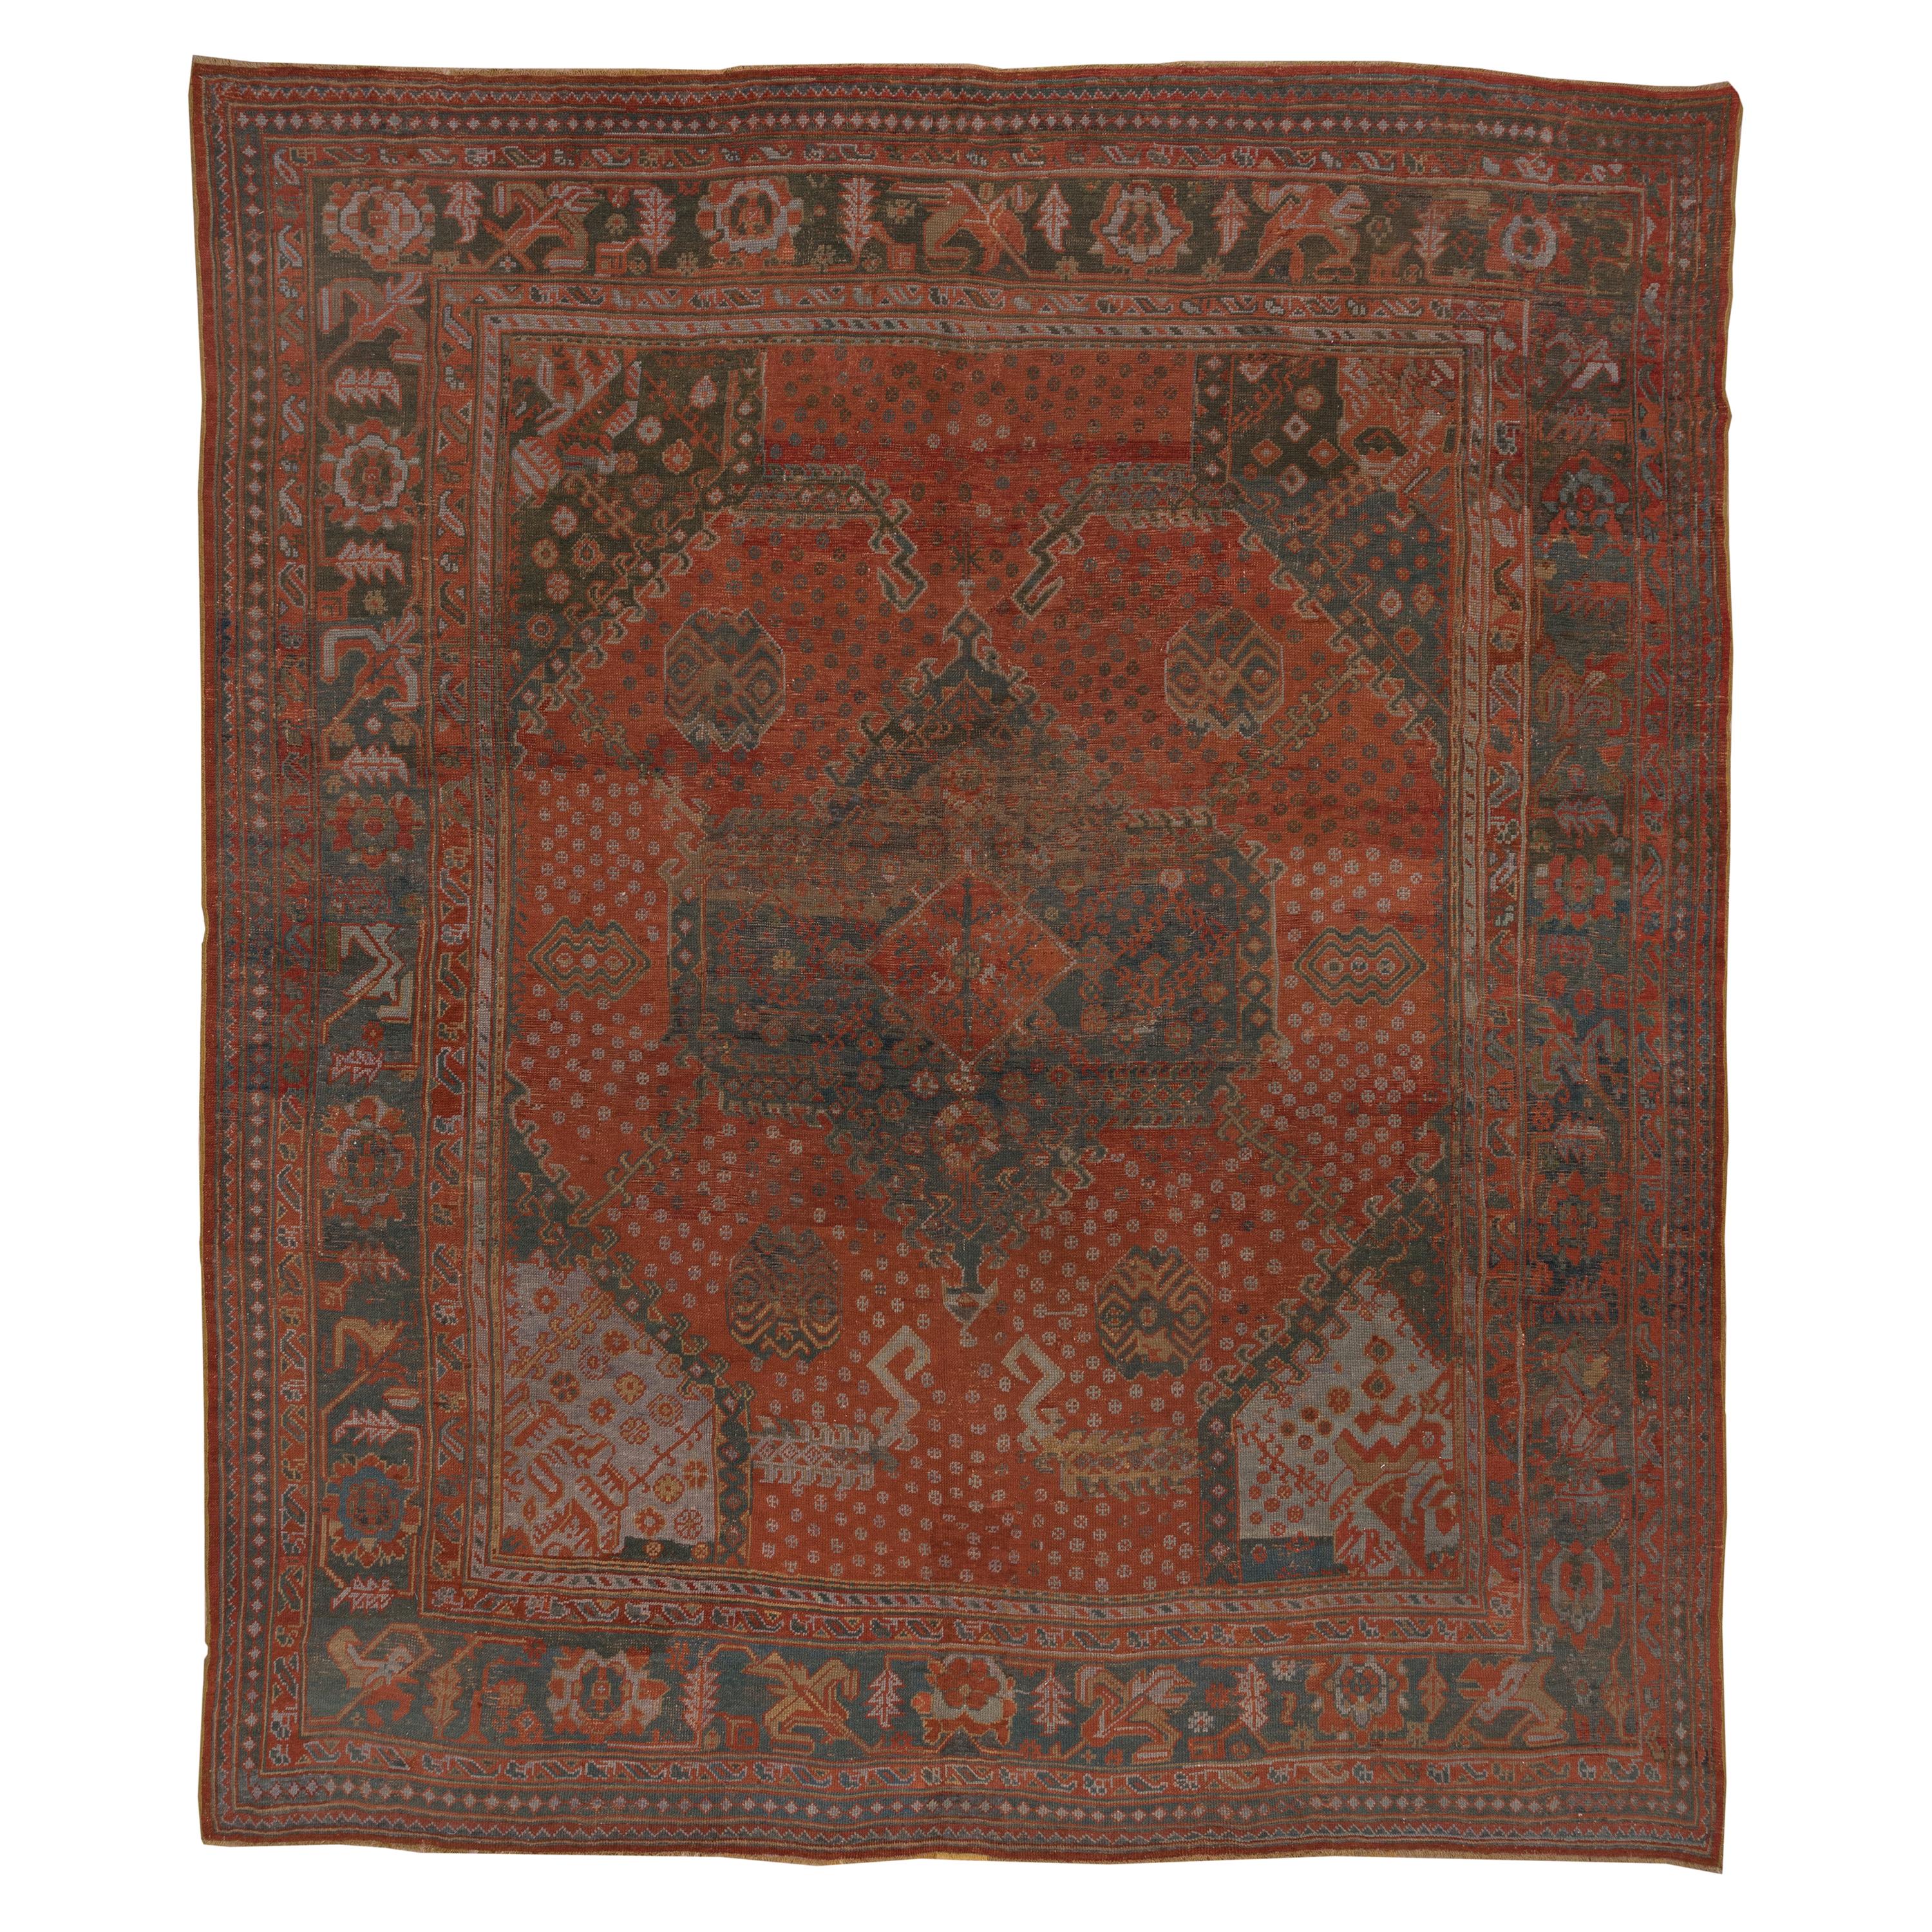 Antique Turkish Oushak Large Carpet, Orange & Teal Palette, Circa 1920s For Sale